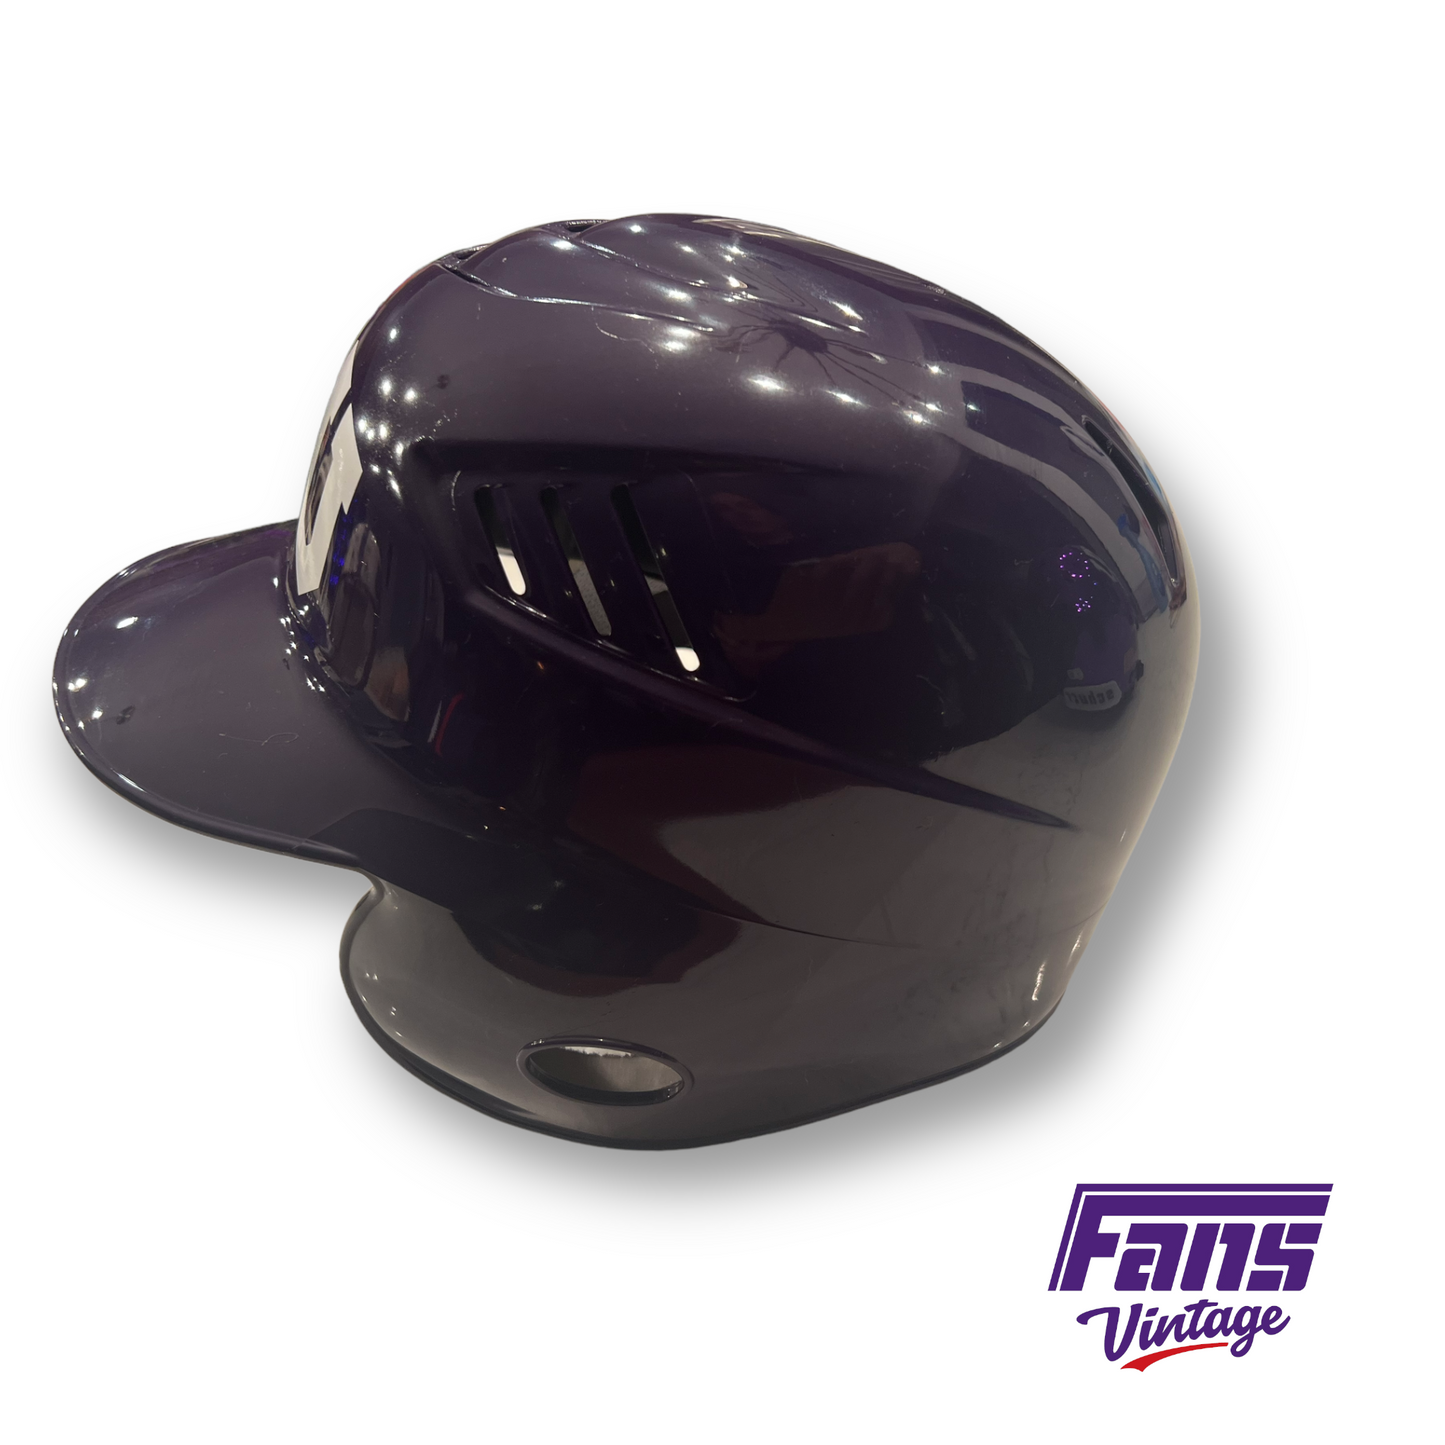 GAME WORN TCU Baseball Helmet